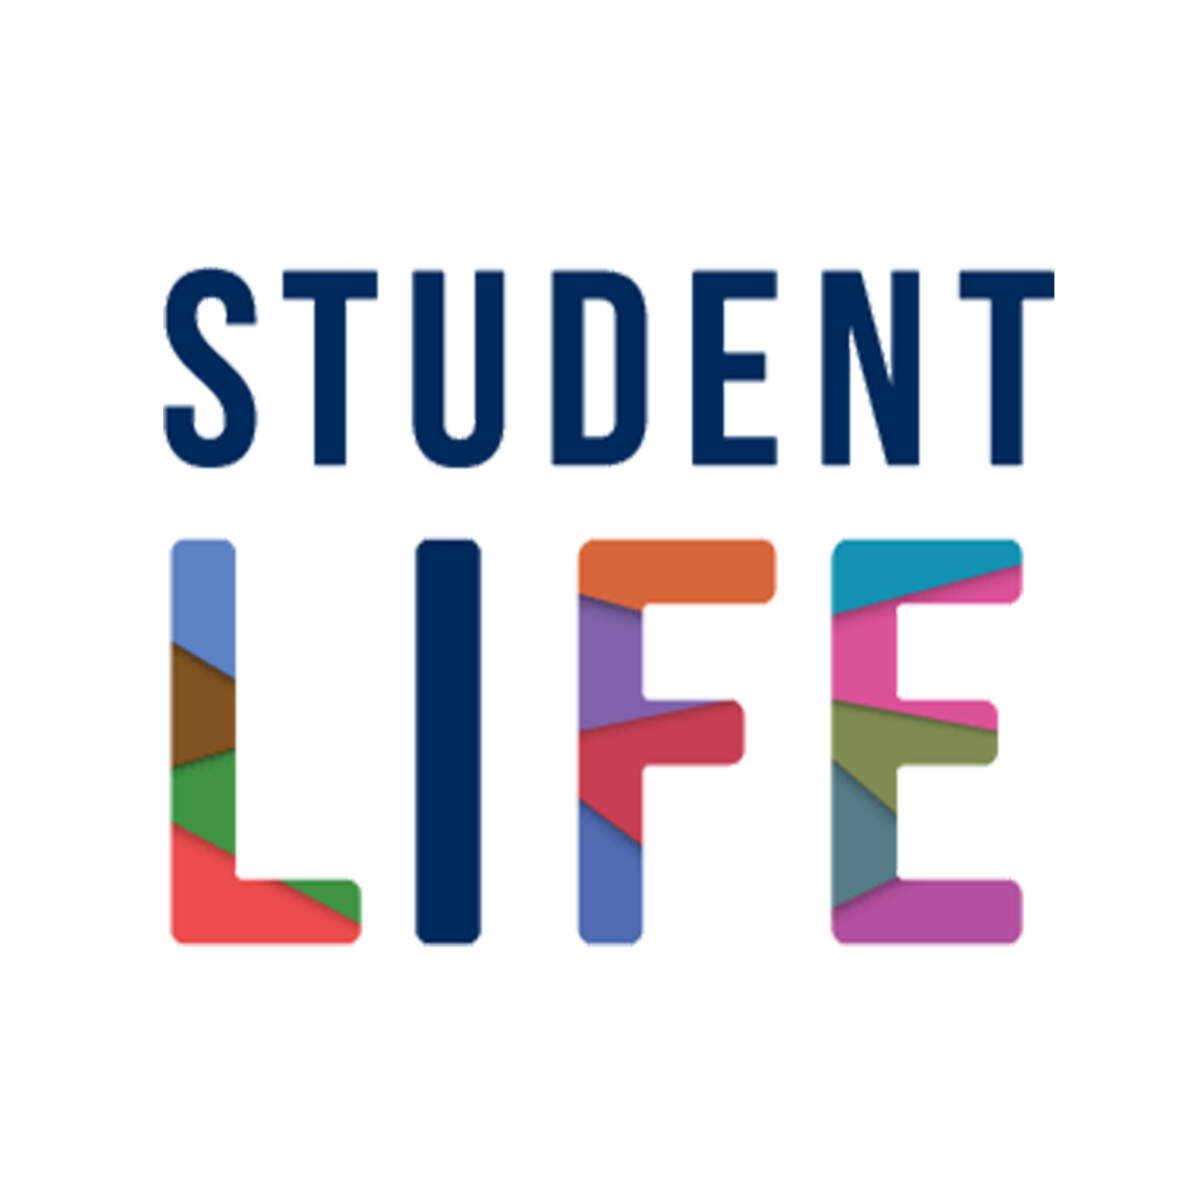 Student Life Logo